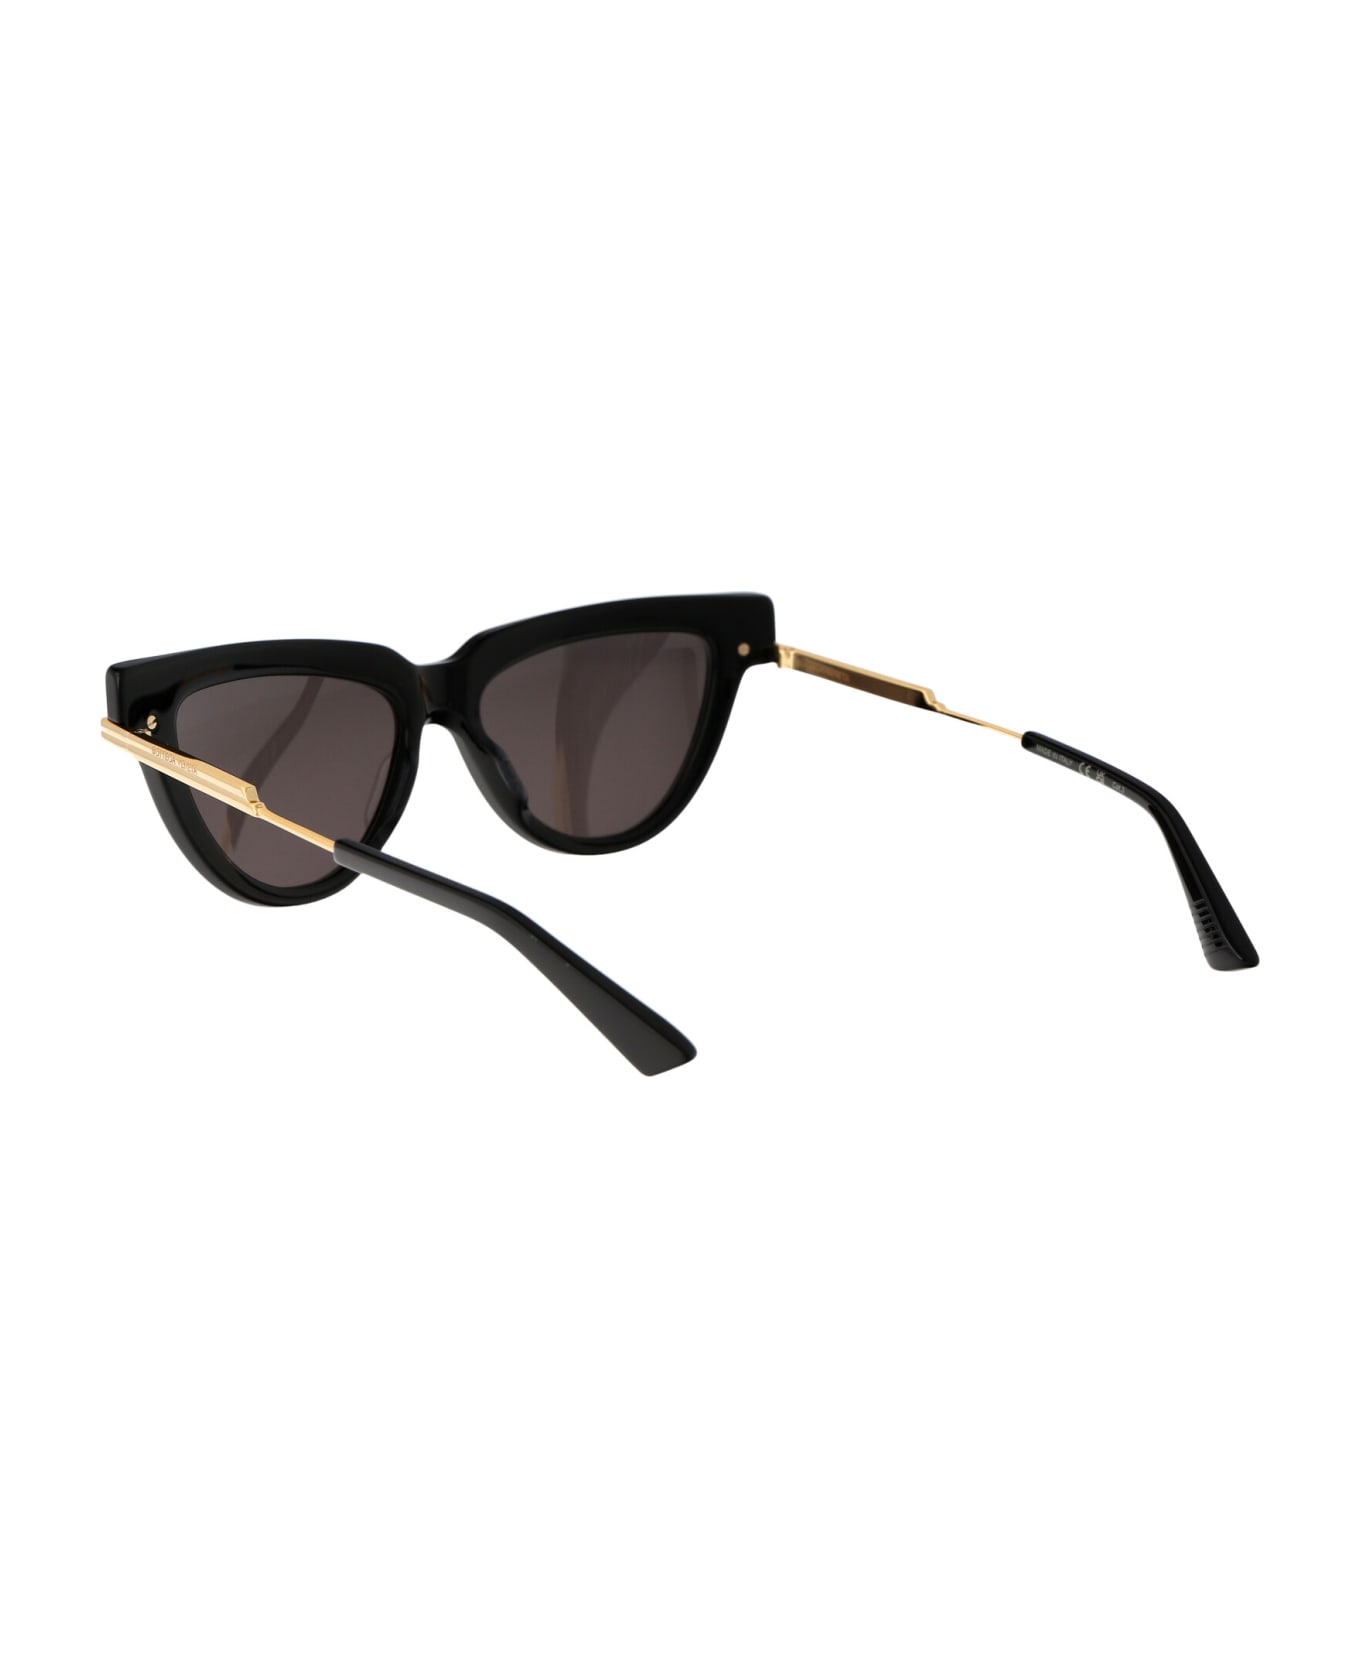 Bottega Veneta Eyewear Bv1265s Sunglasses - 001 BLACK GOLD GREY